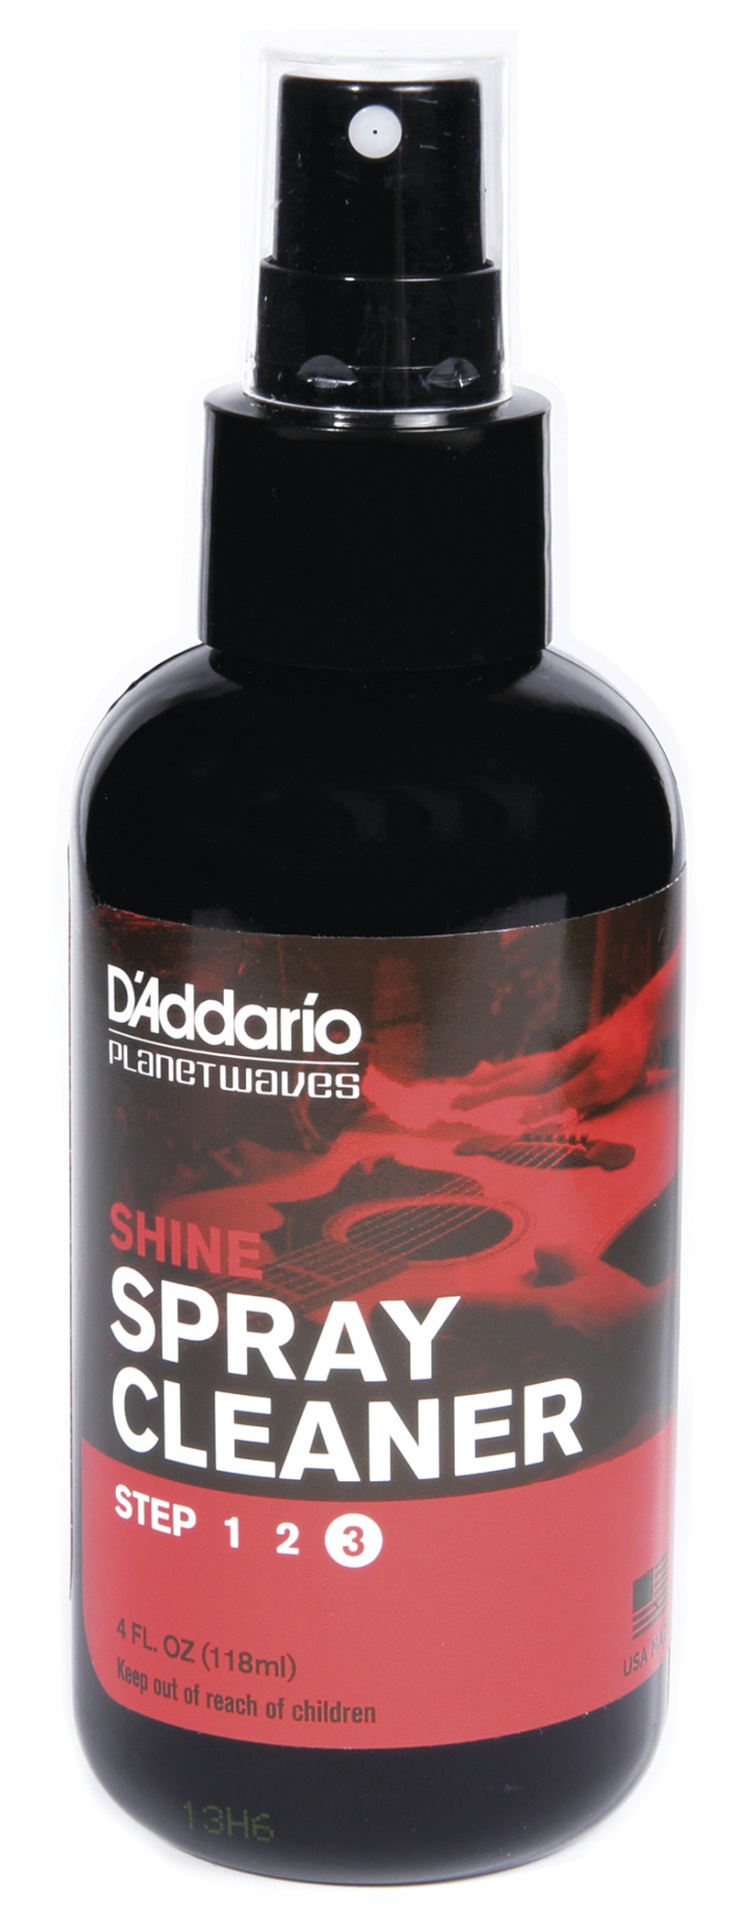 D'Addario Shine - Spray Cleaner